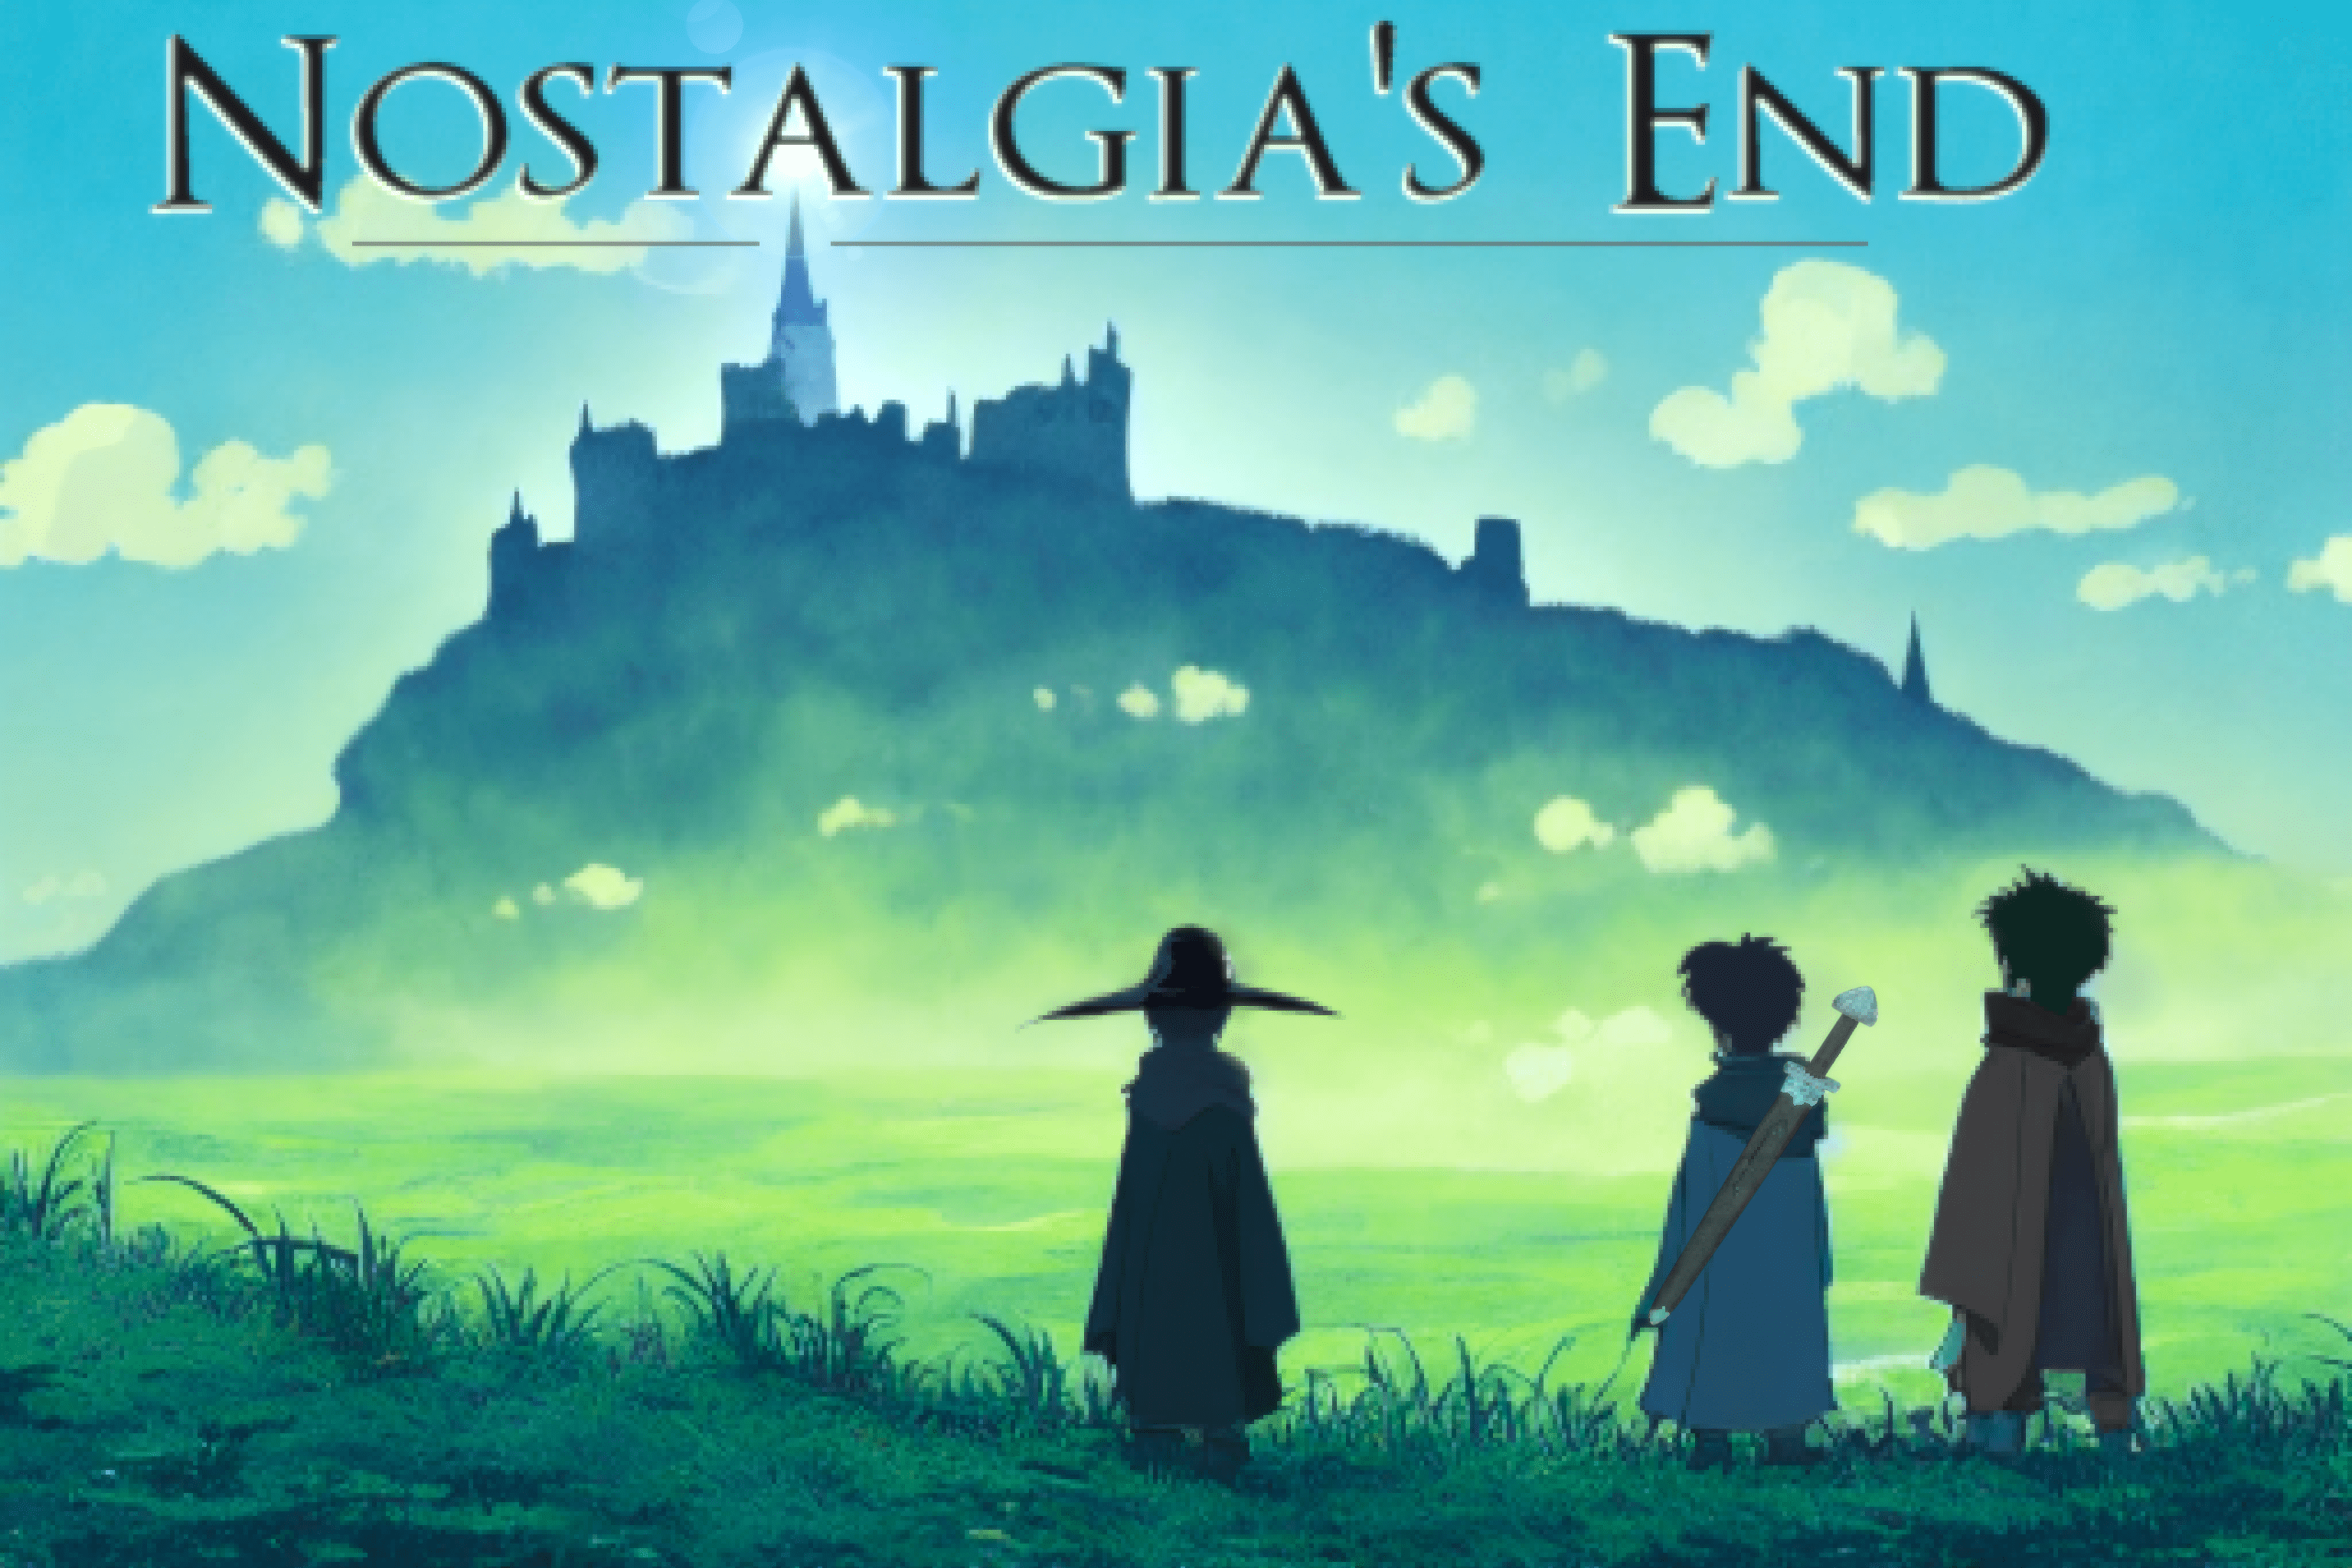 Nostalgia's End - SNES inspired RPG